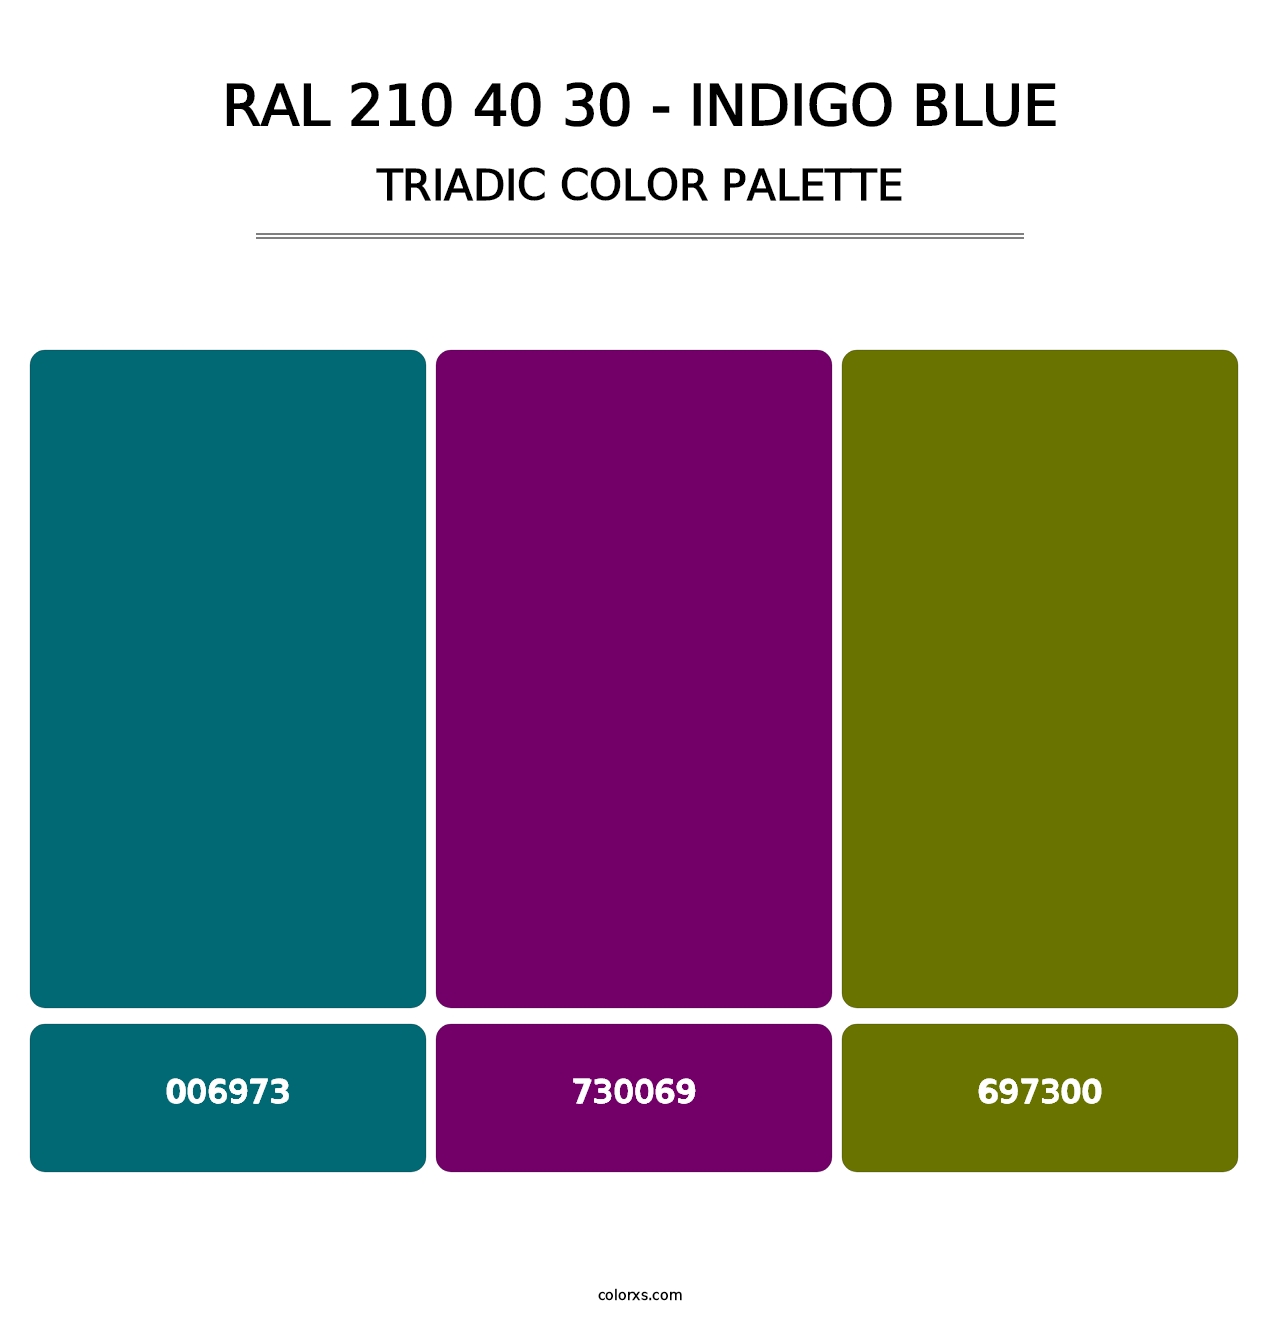 RAL 210 40 30 - Indigo Blue - Triadic Color Palette